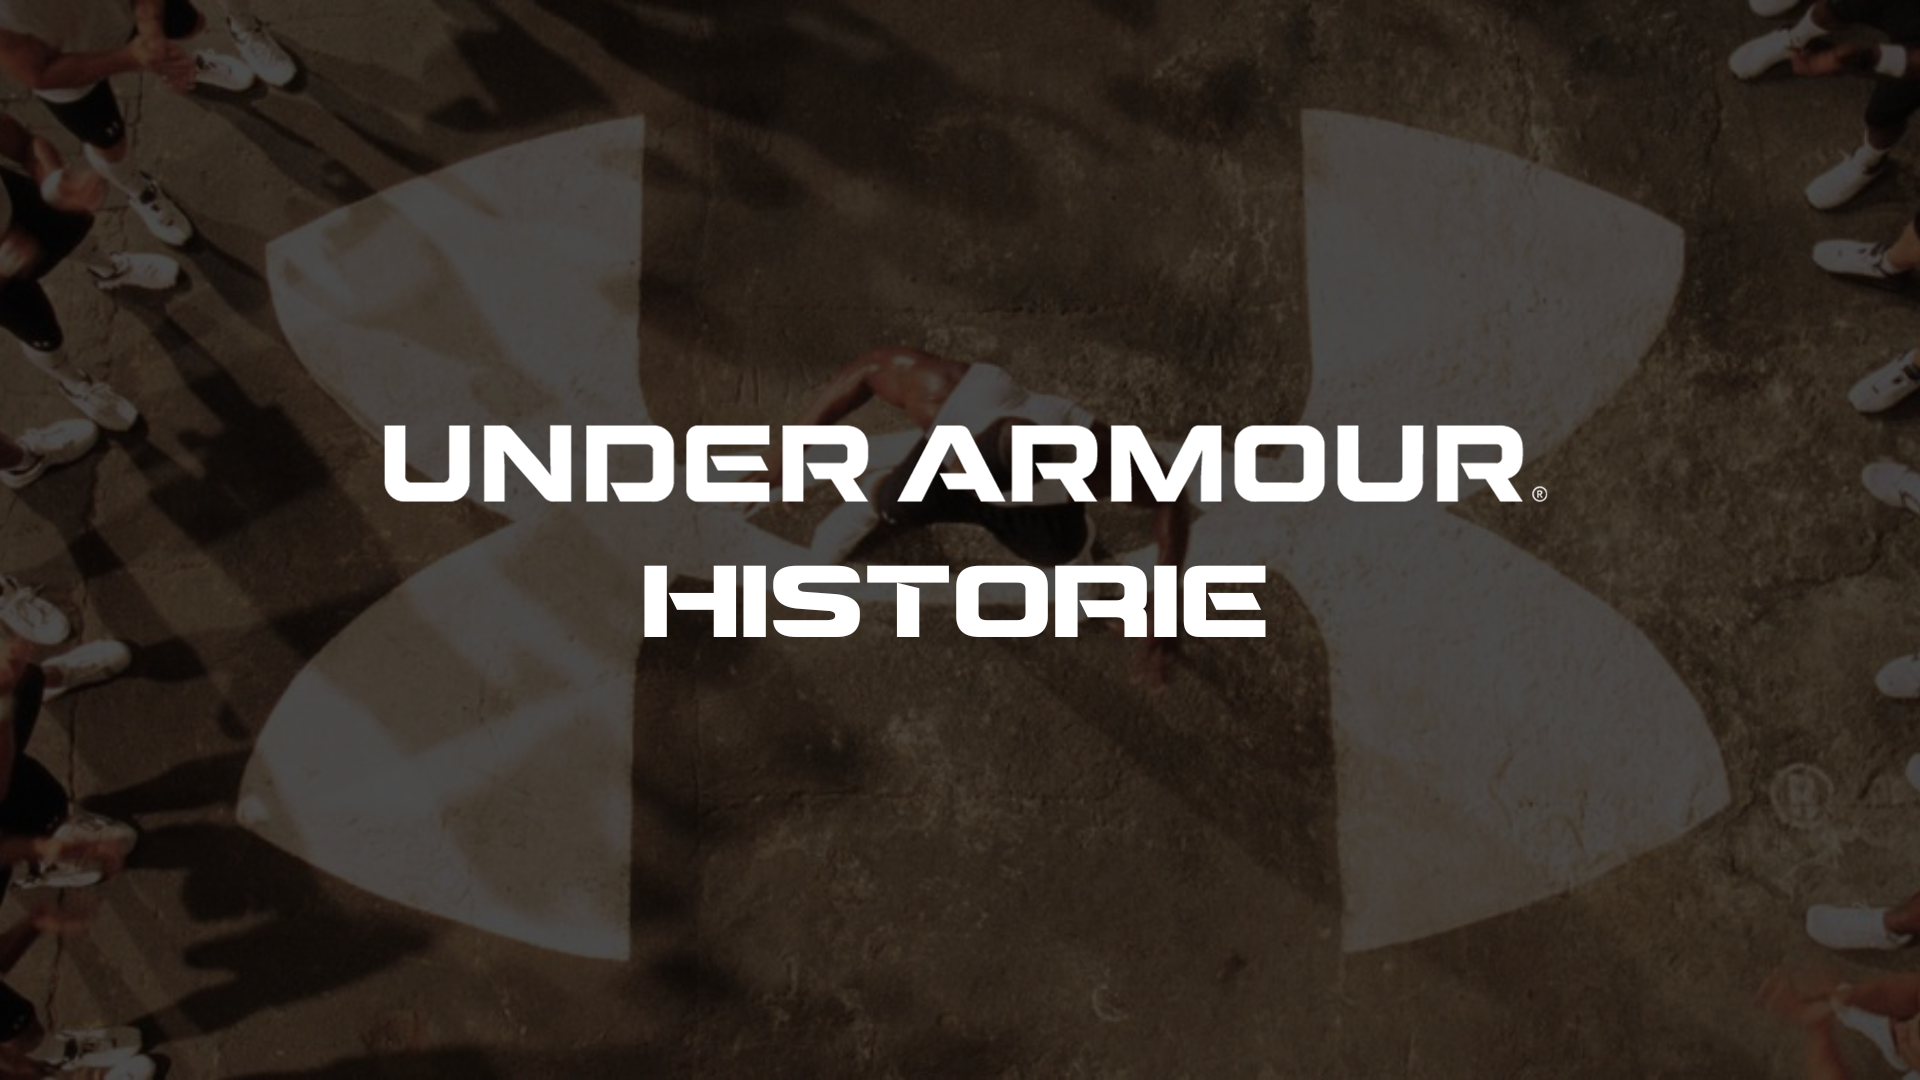 Under armour historie